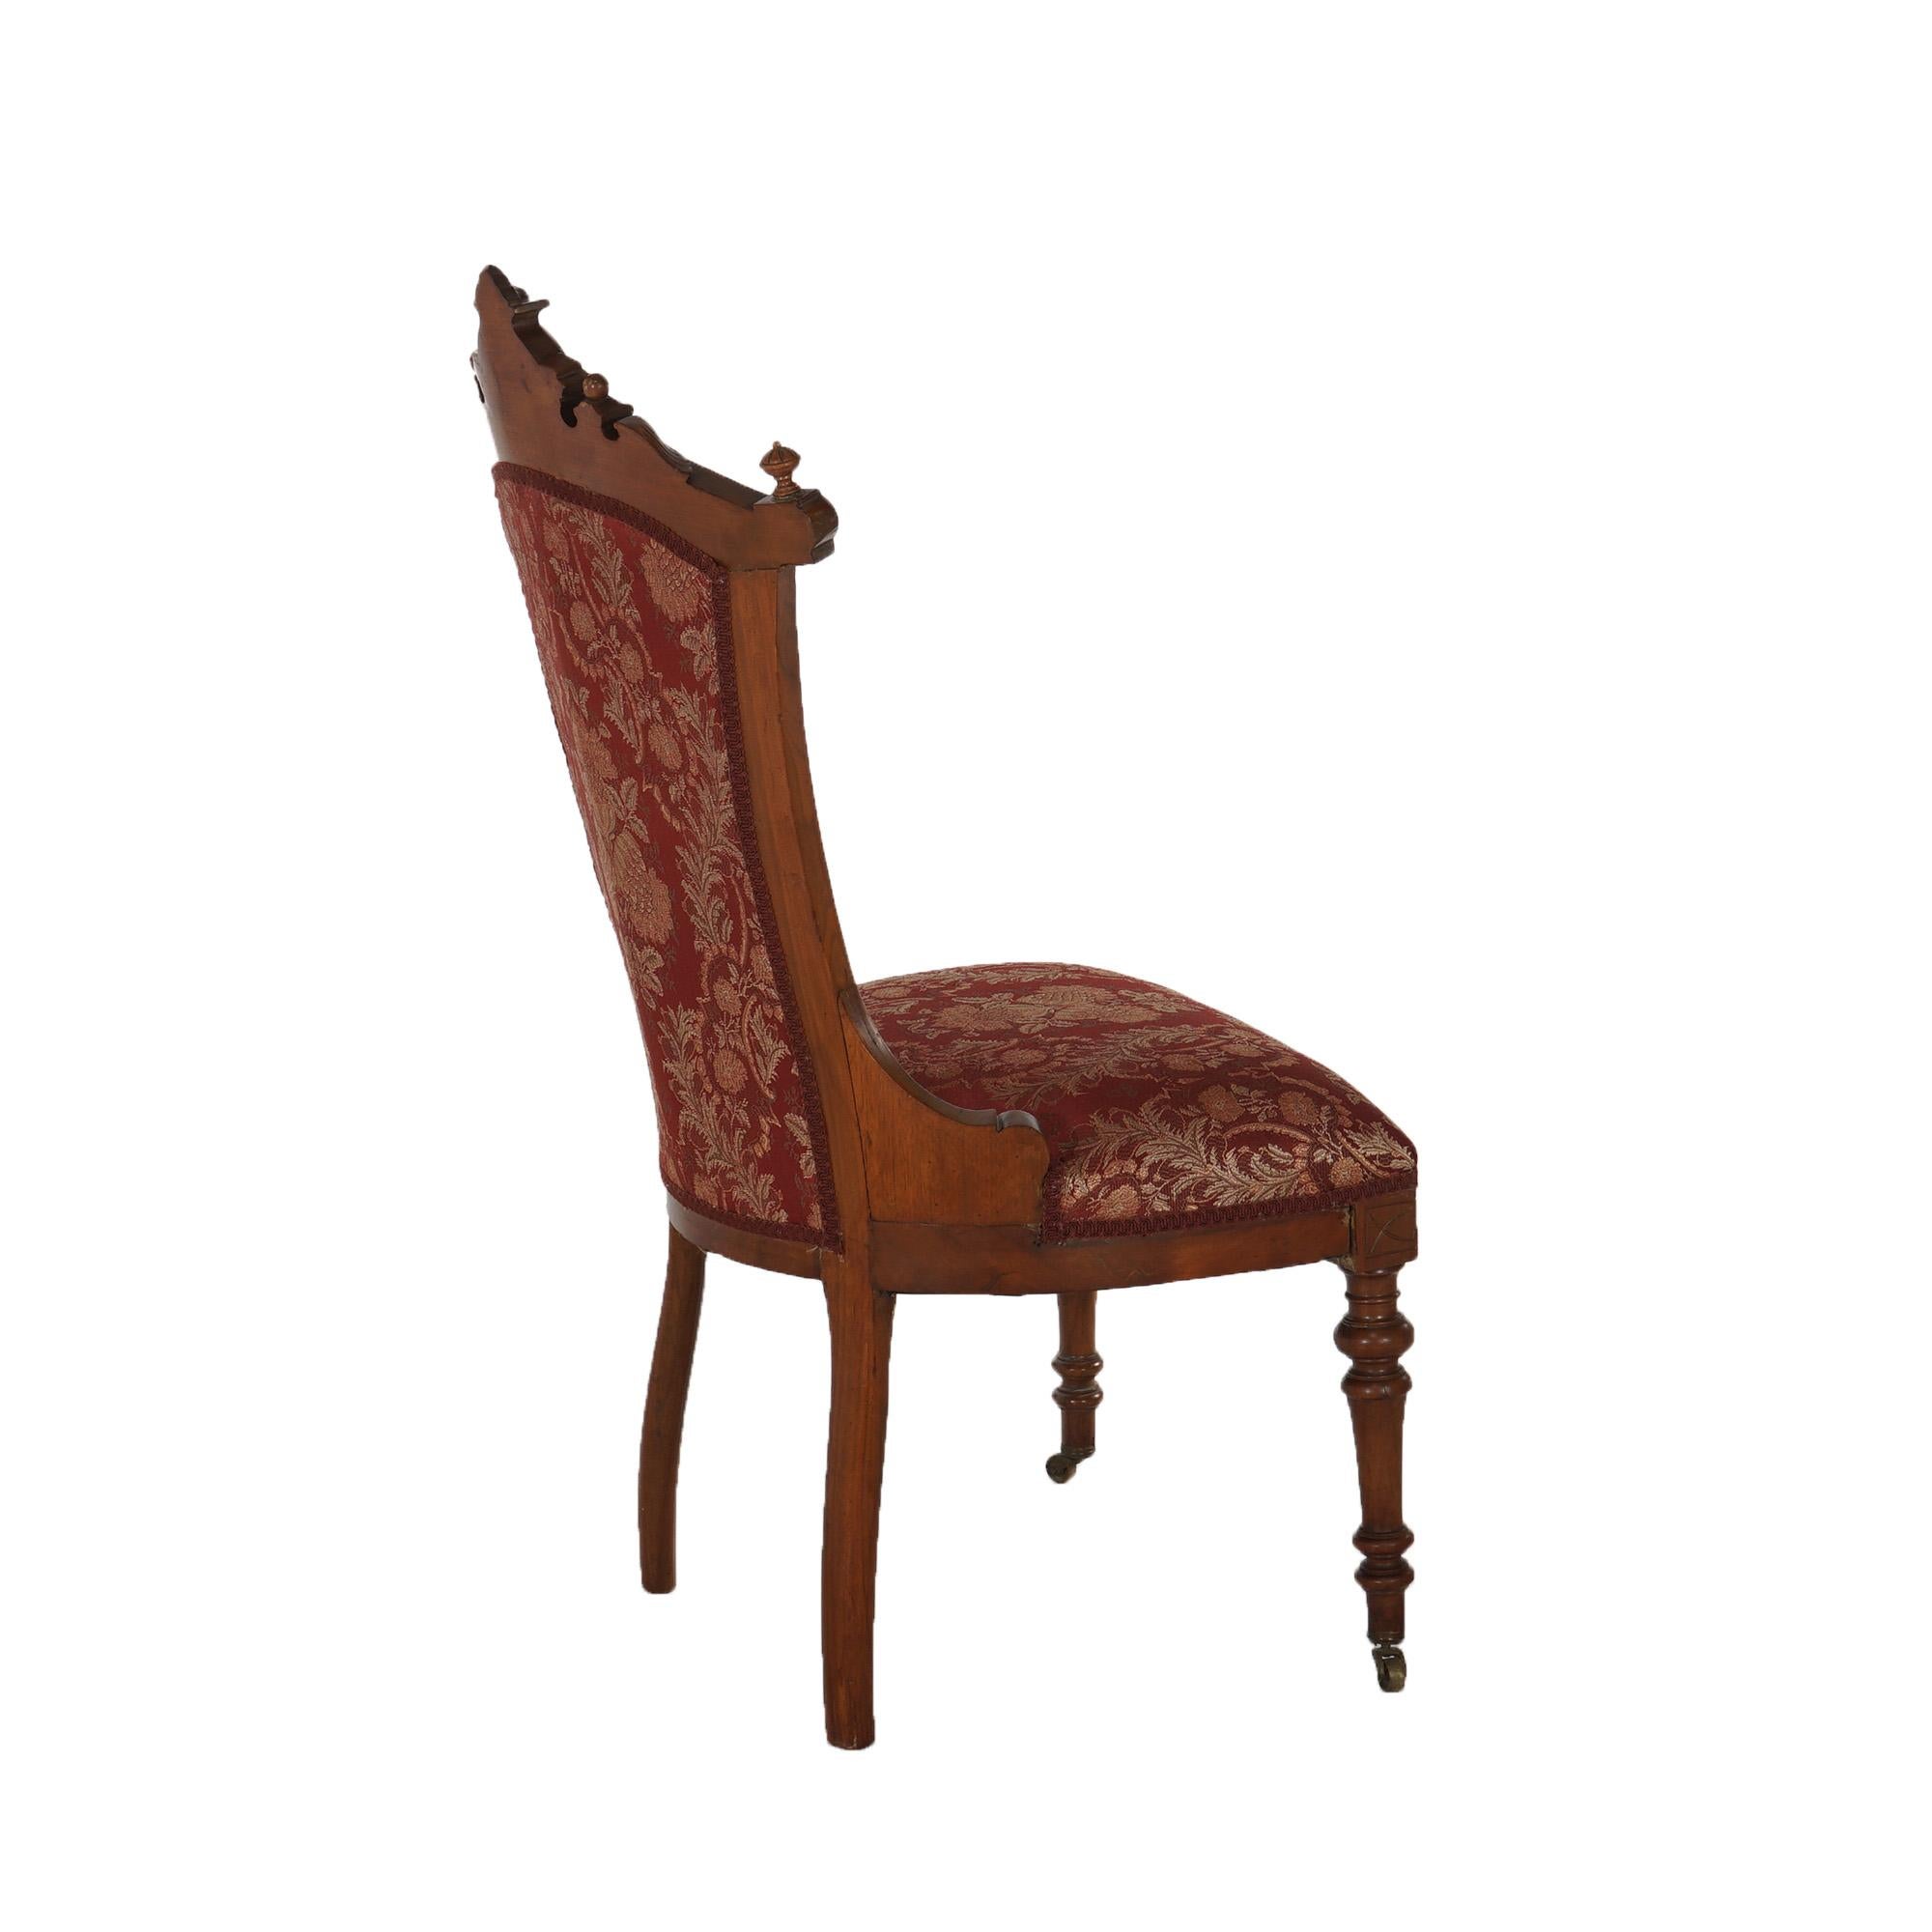 Antique John Jelliff Renaissance Revival Carved Walnut Side Chair C1880 For Sale 6